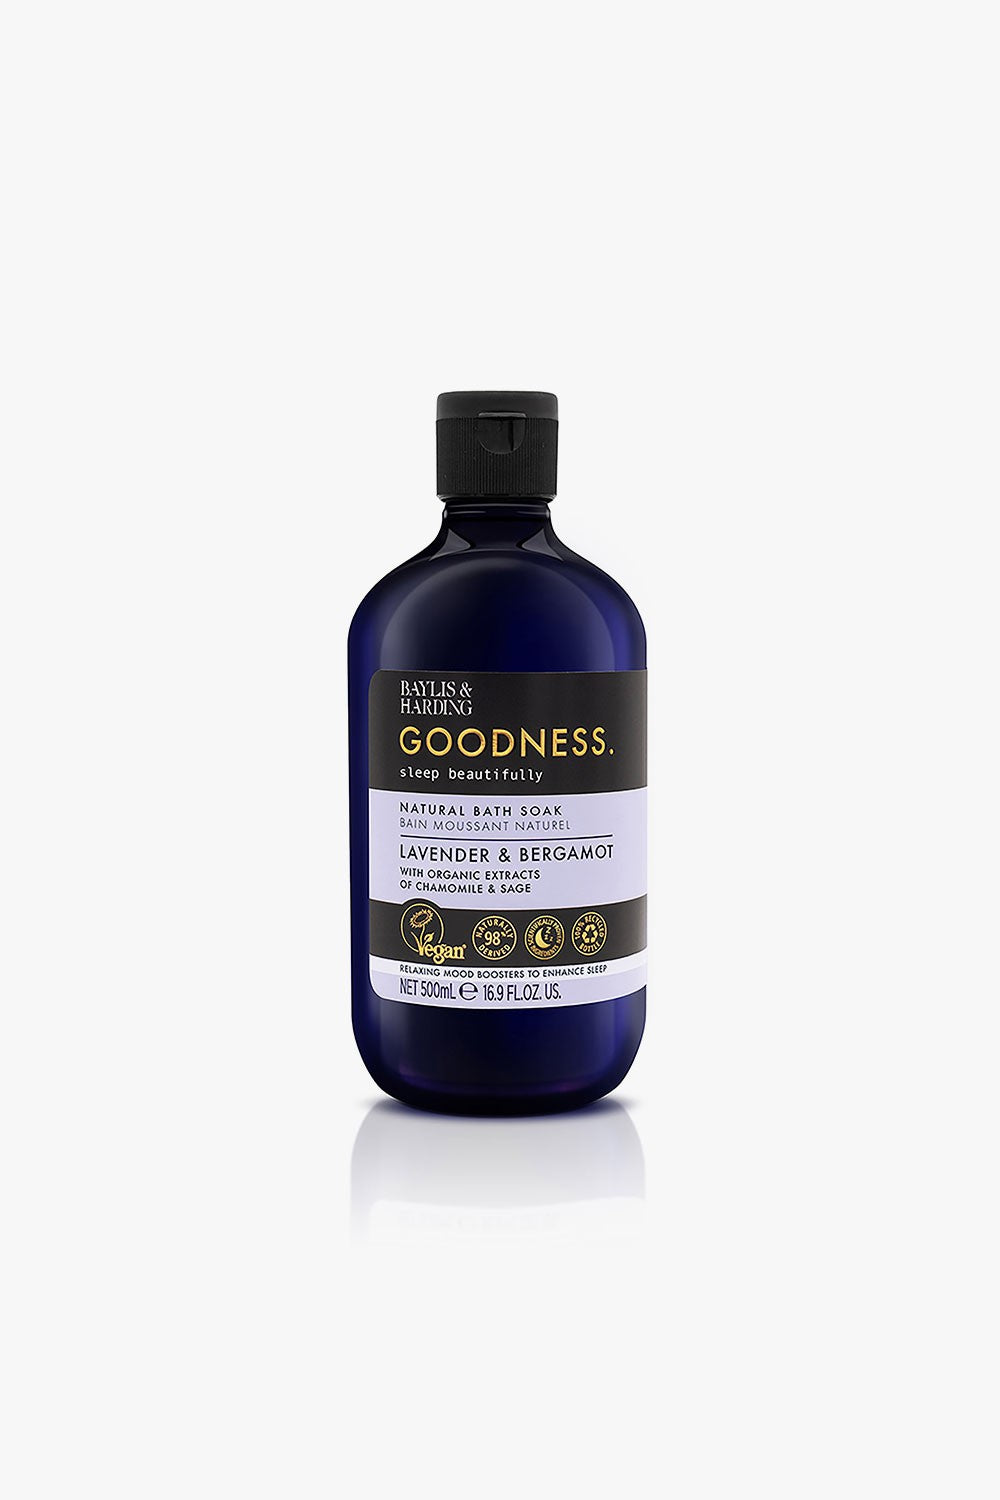 Baylis & Harding Goodness Sleep Lavender & Bergamot Bath Soak, 500 ml